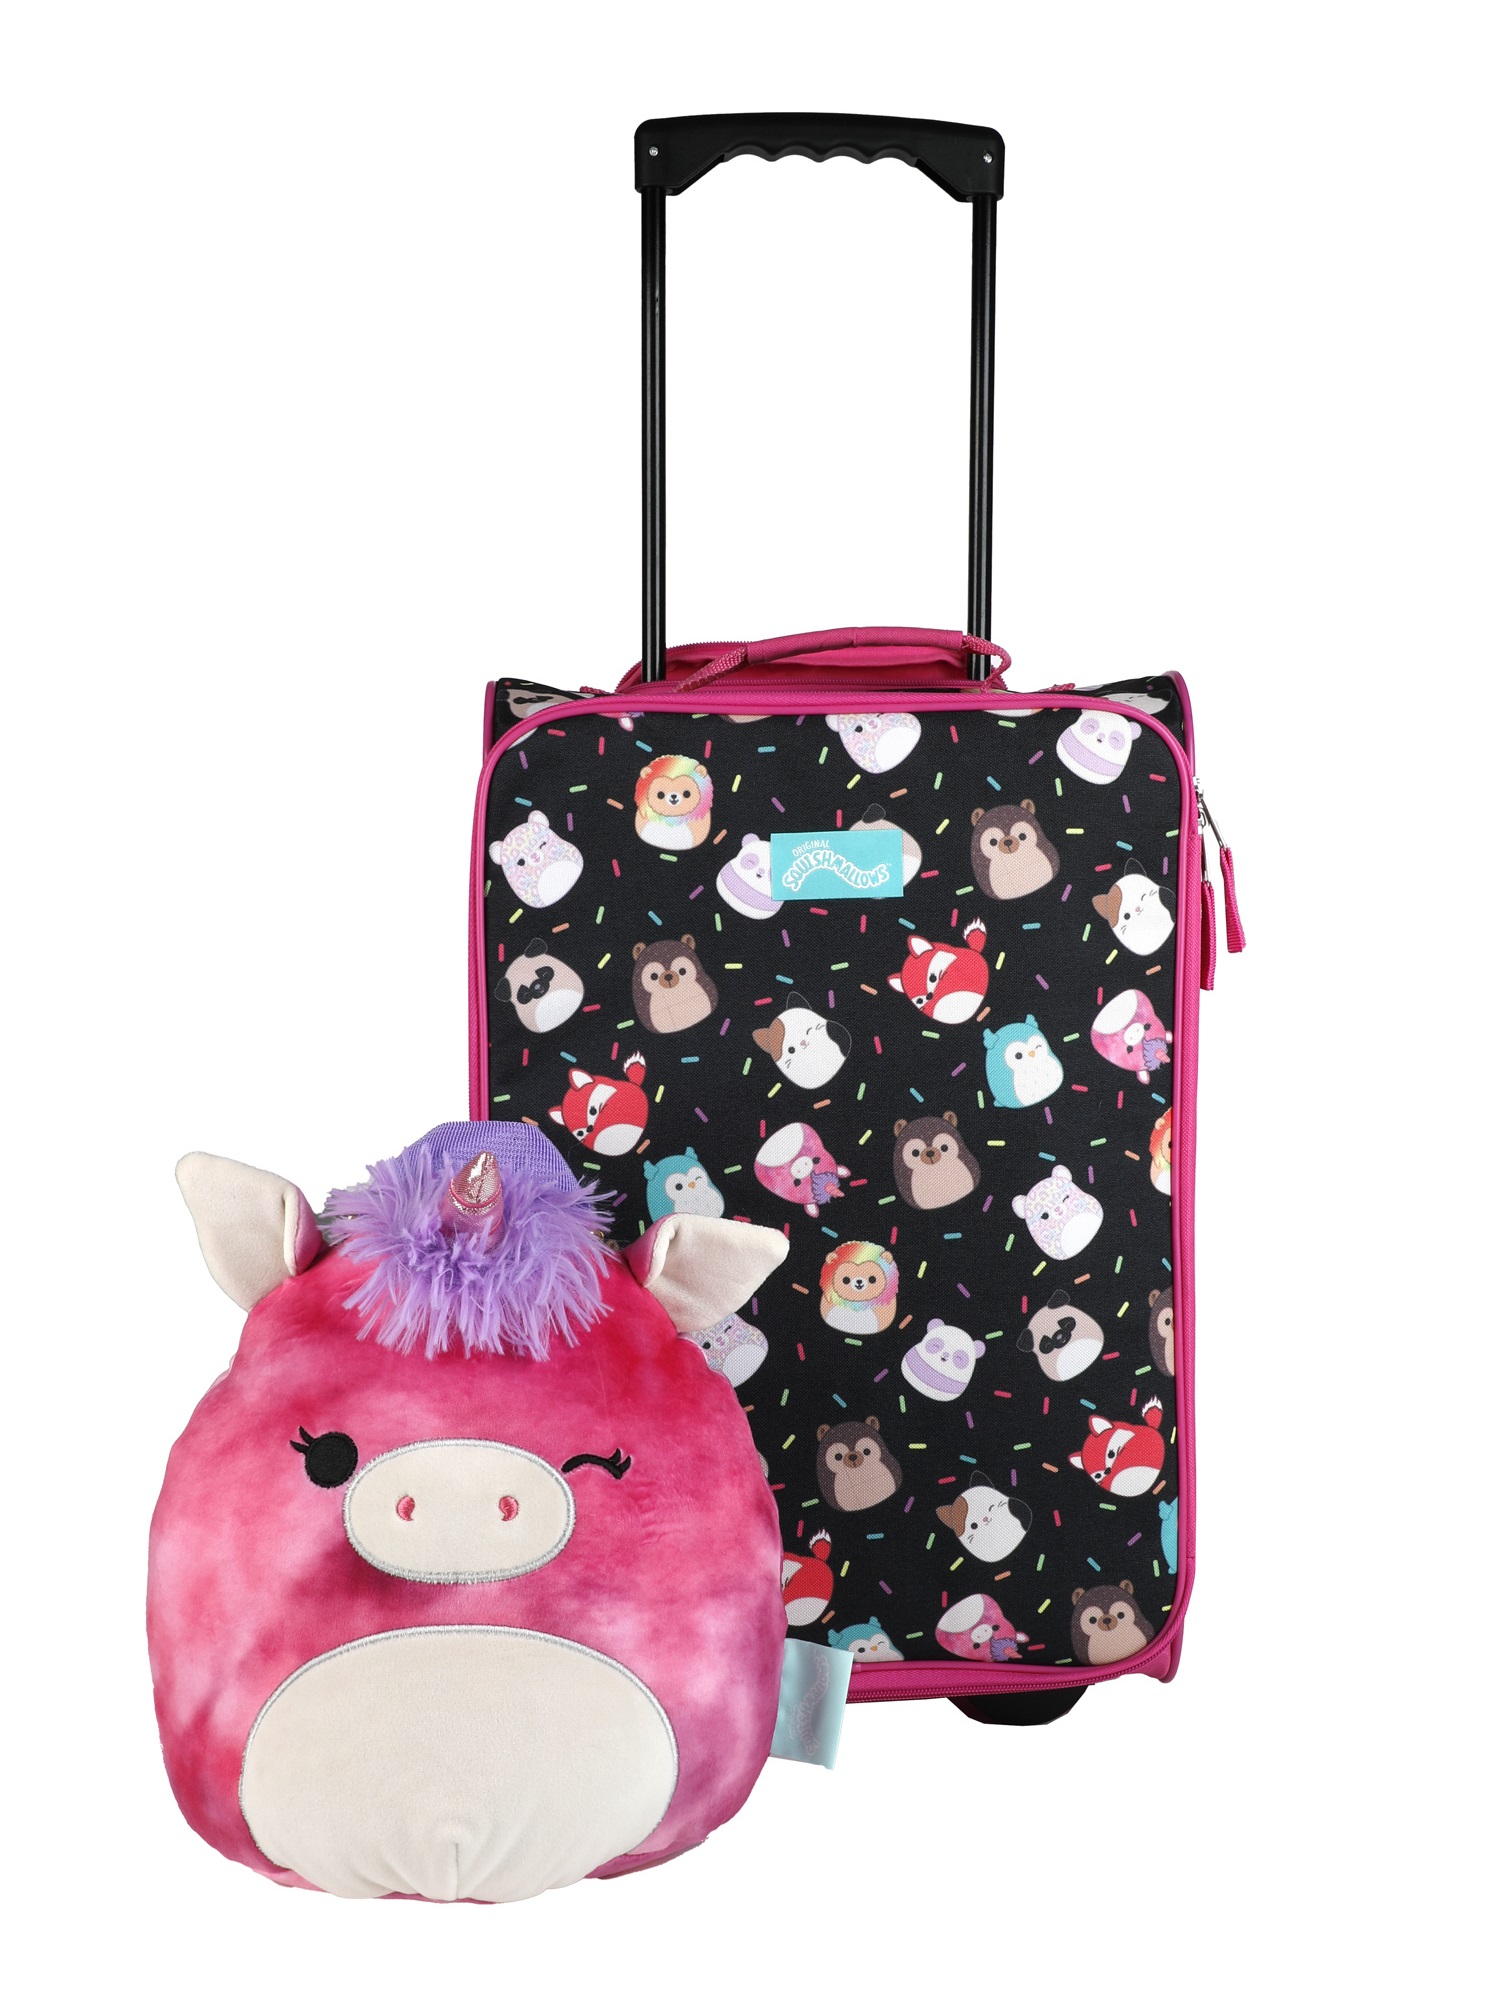 Squishmallows Lola Unicorn 2pc  Travel Set with 18" Luggage and 10" Plush Backpack - image 1 of 9